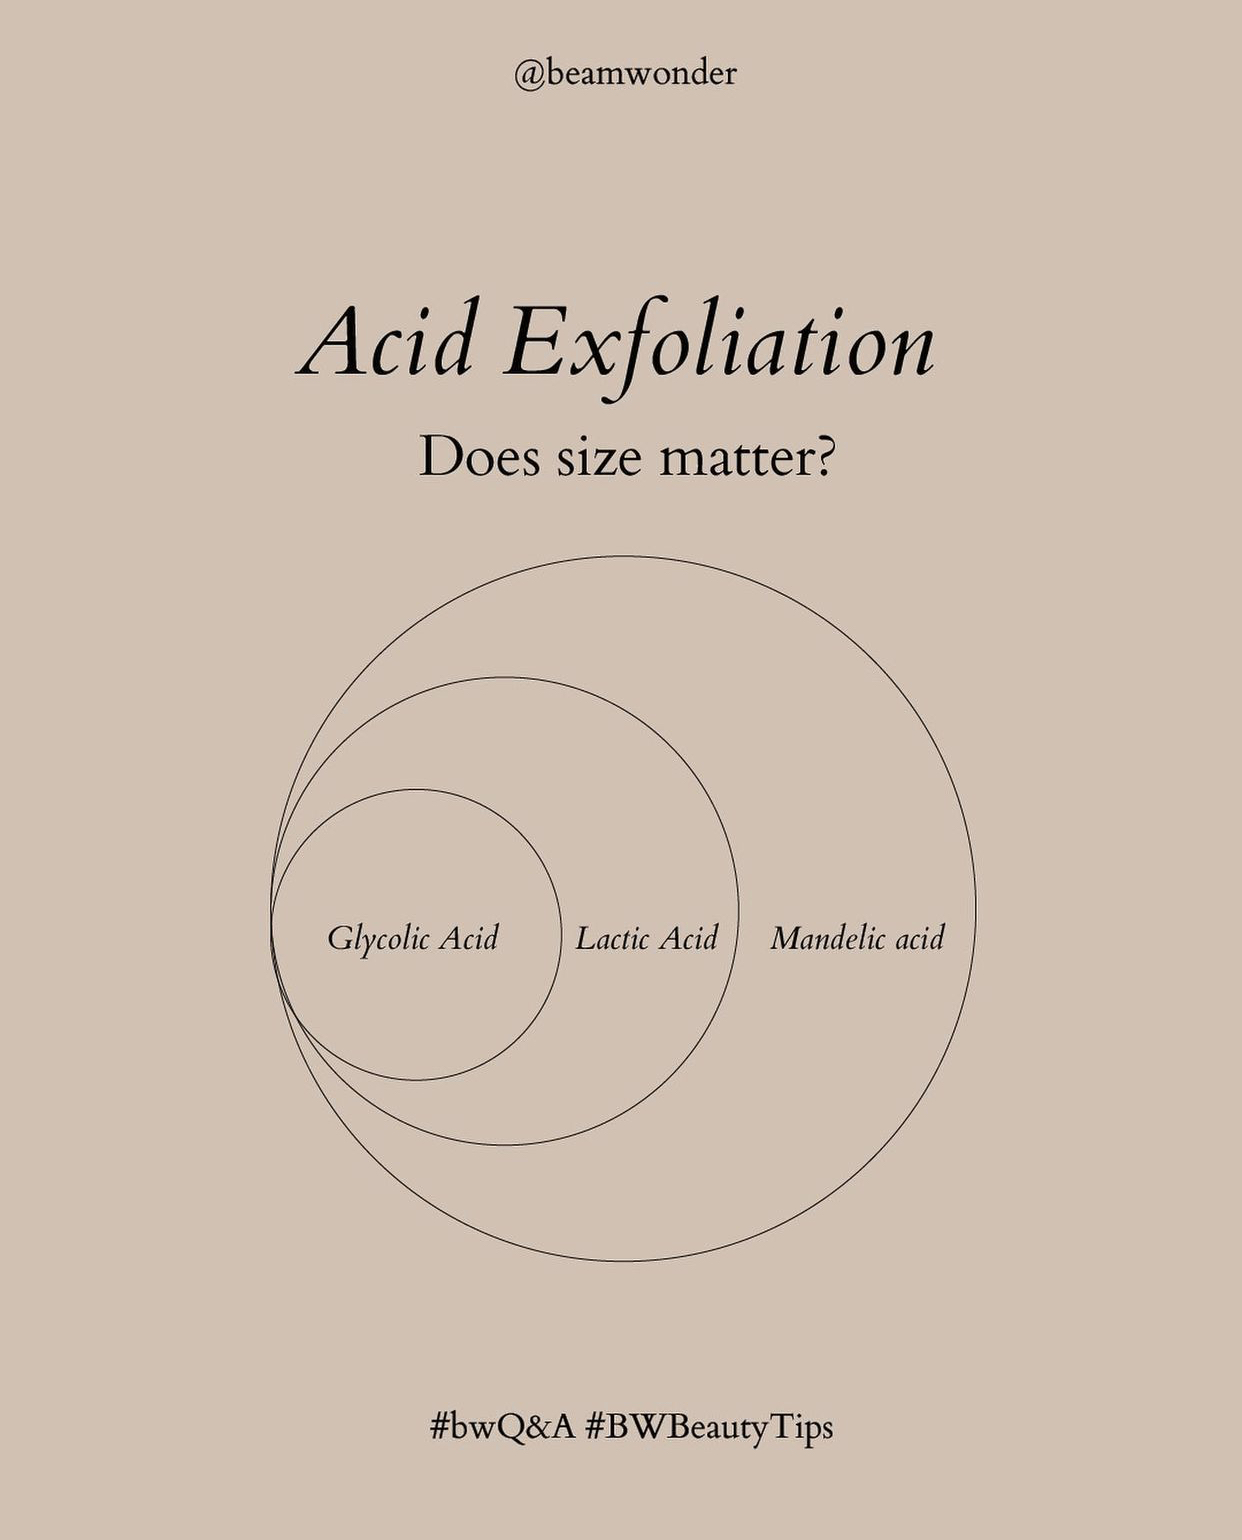 Does Acid Exfoliation size matter?